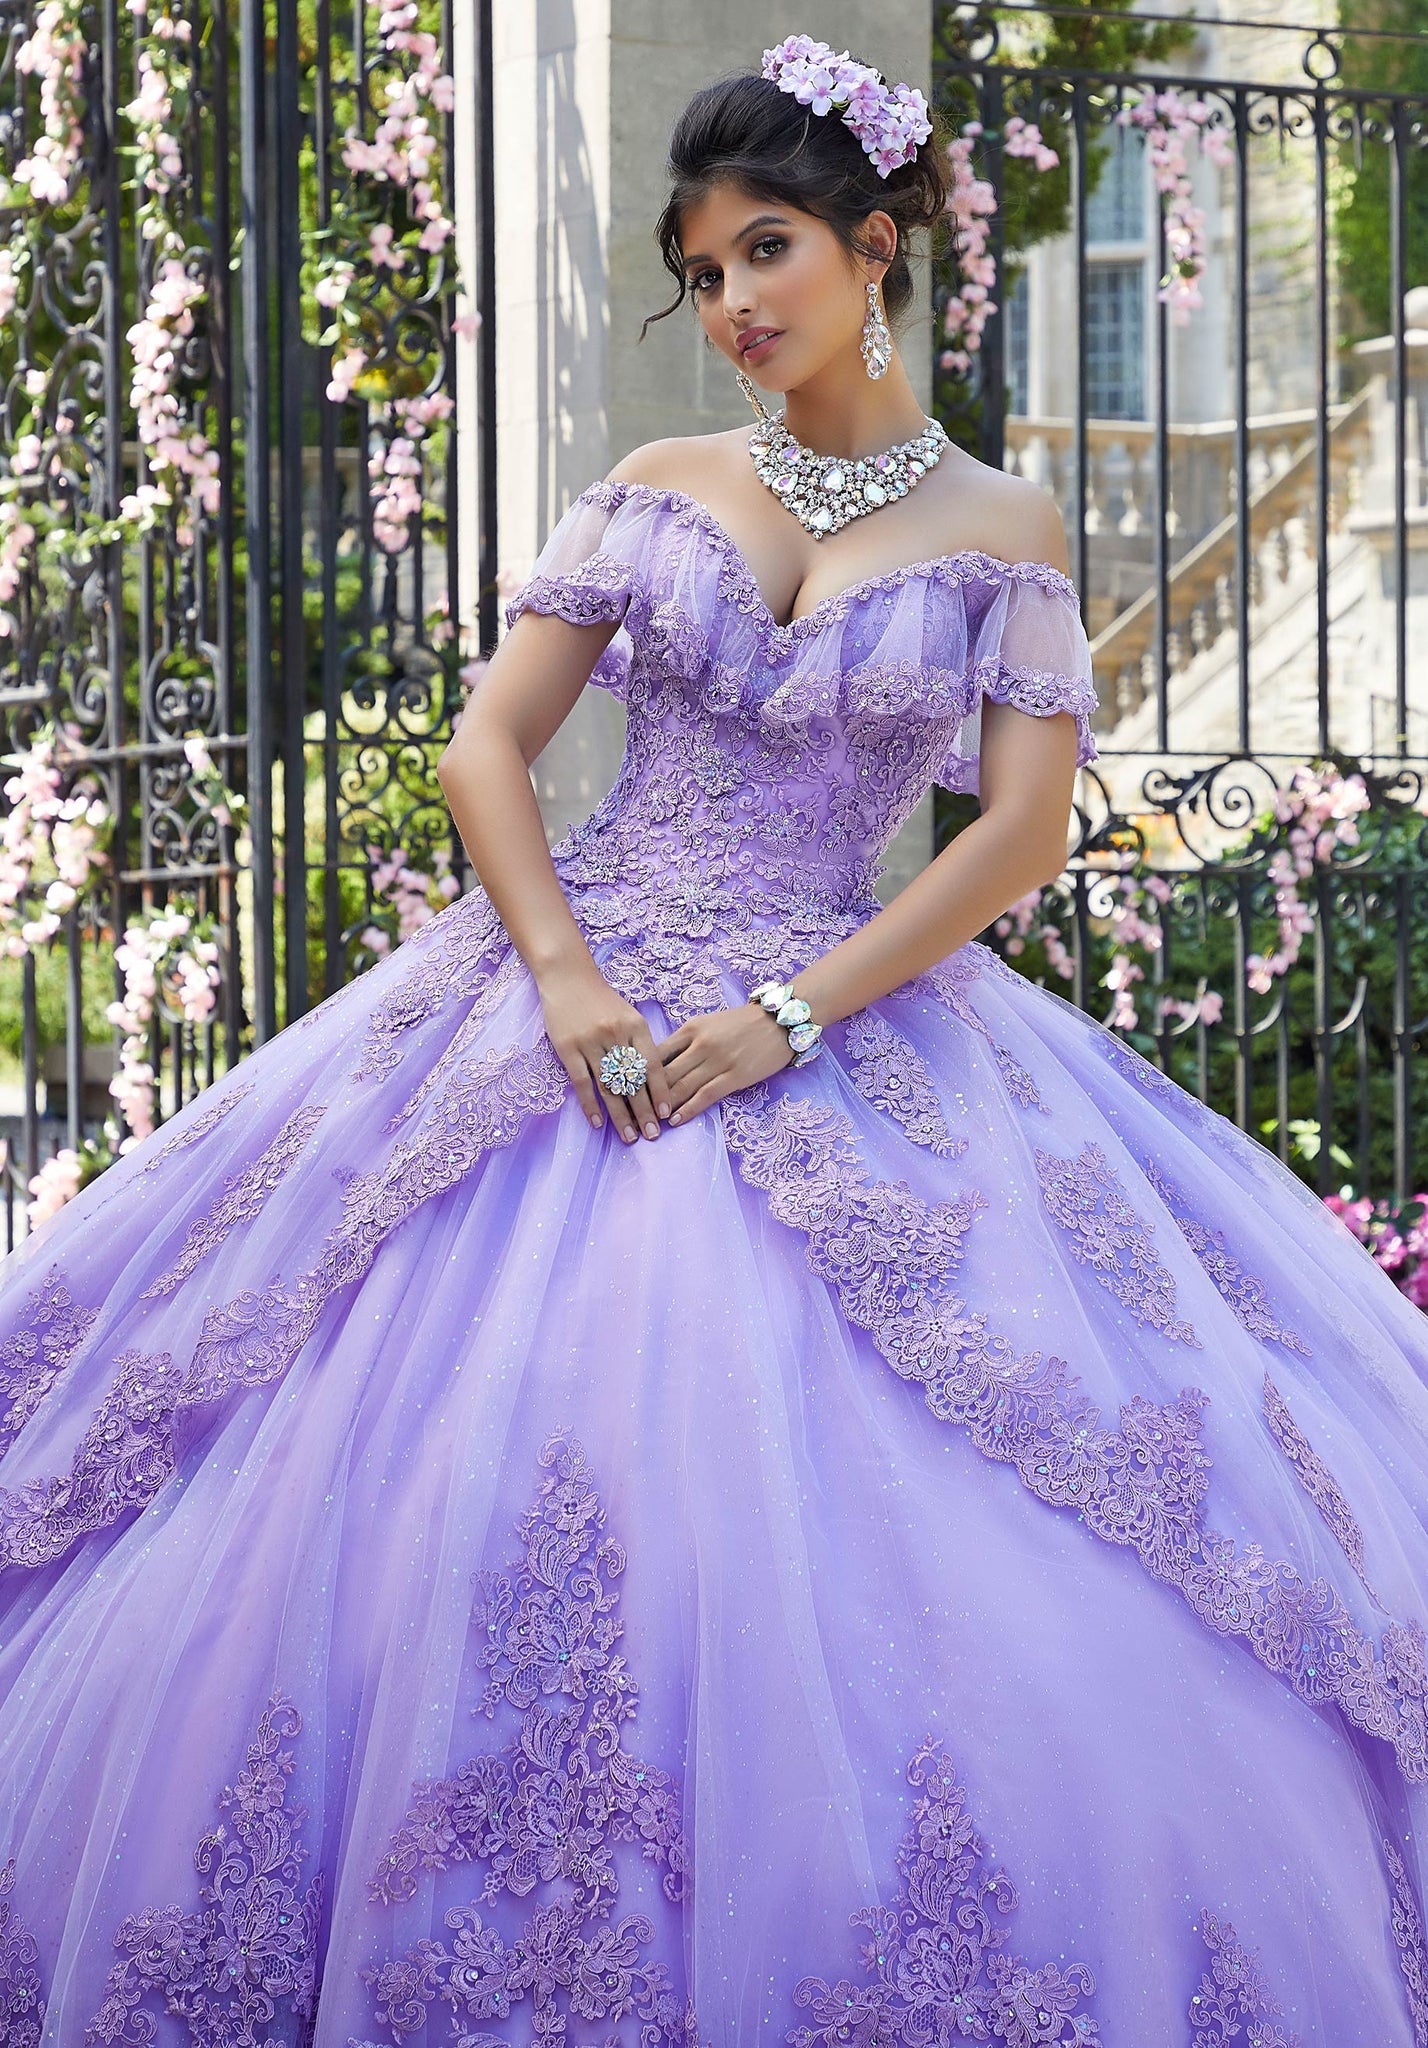 Princess Tulle and Glitter Tulle Quinceañera Dress